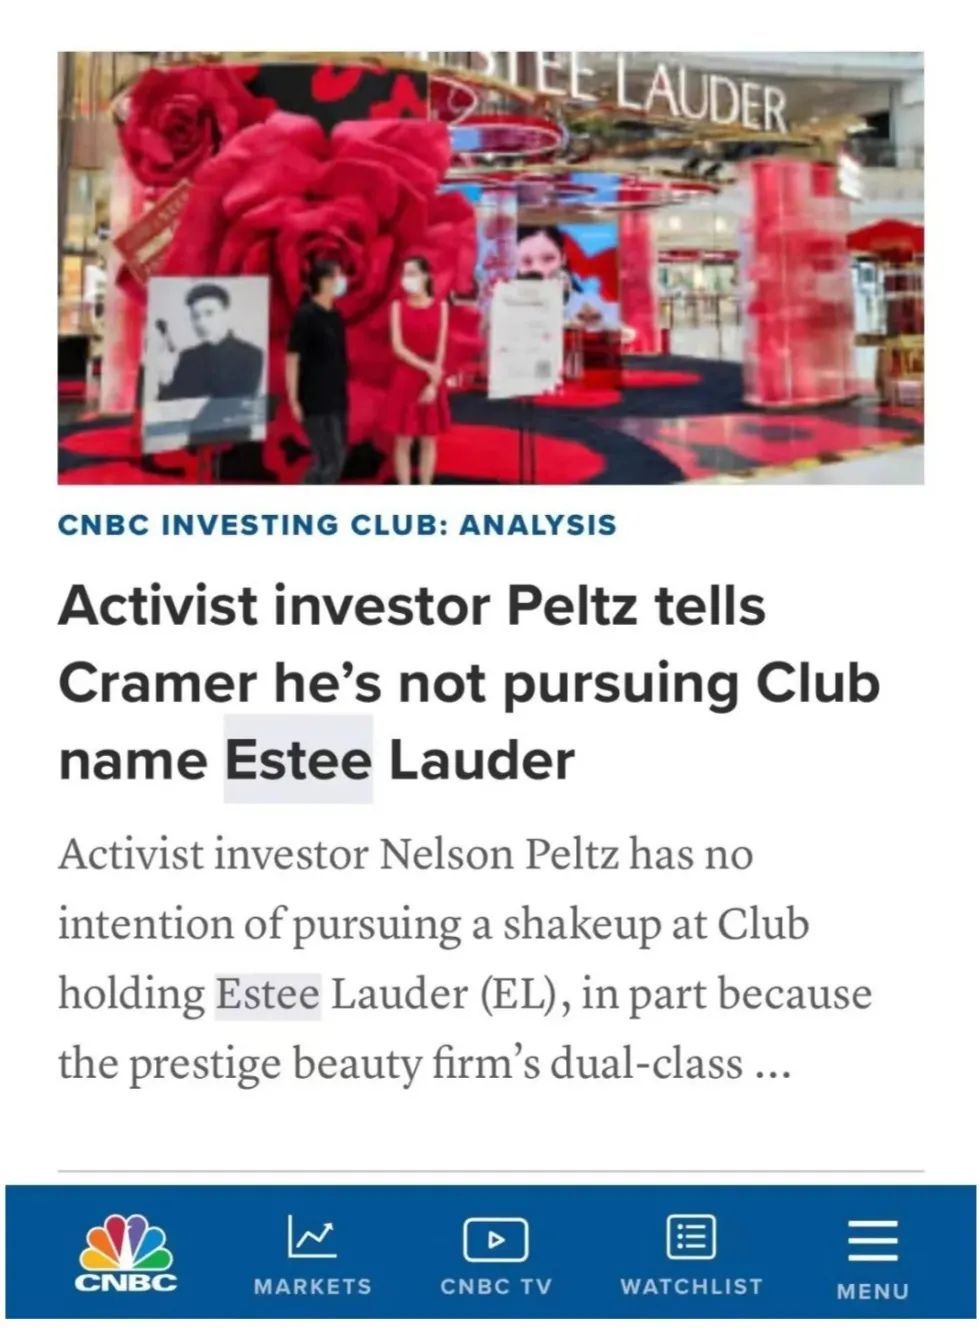 Activist investor Peltz tells Cramer he's not pursuing Estee Lauder